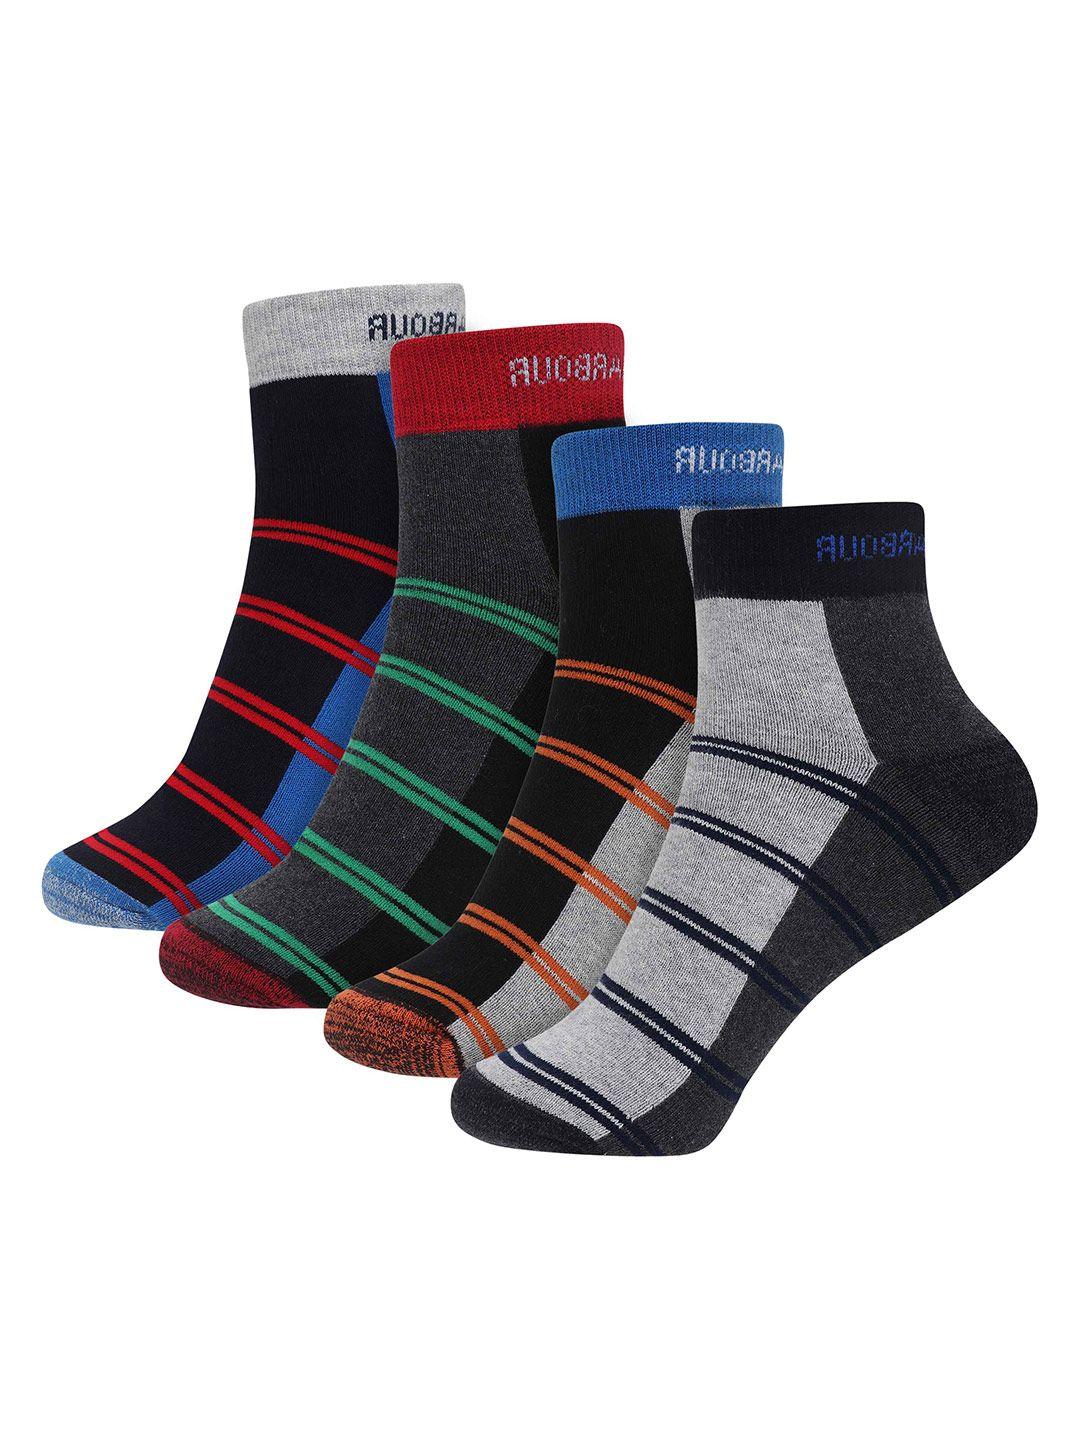 mast & harbour unisex black pack of 4 striped ankle-length socks